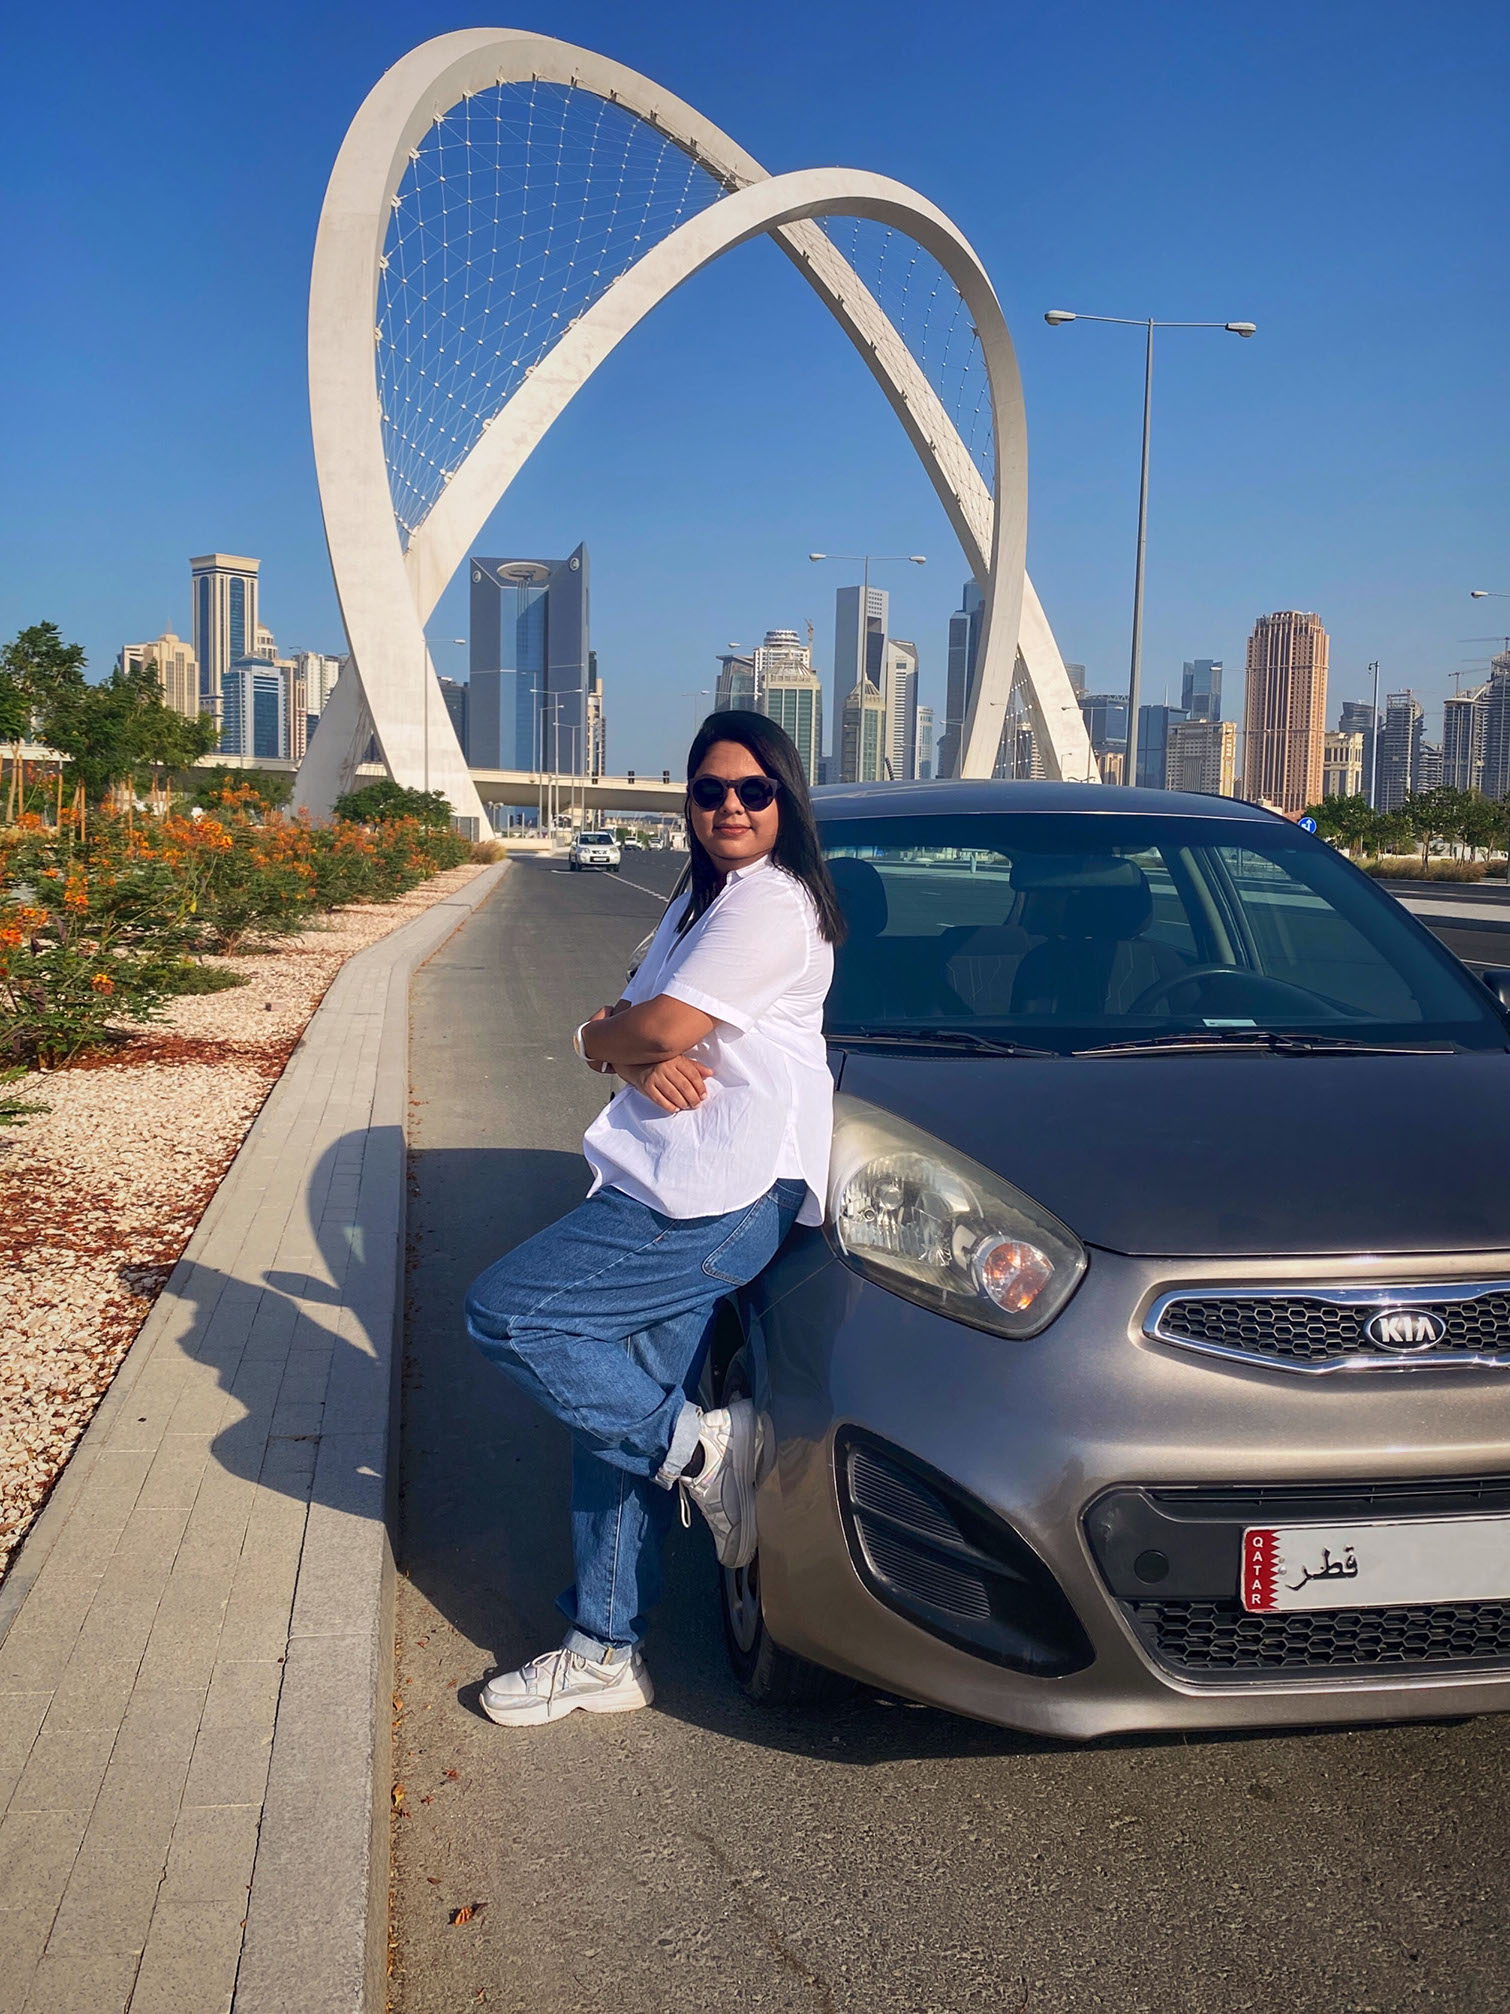 Pankita Bhavsar having fun on the road at the Al Wahda Arches